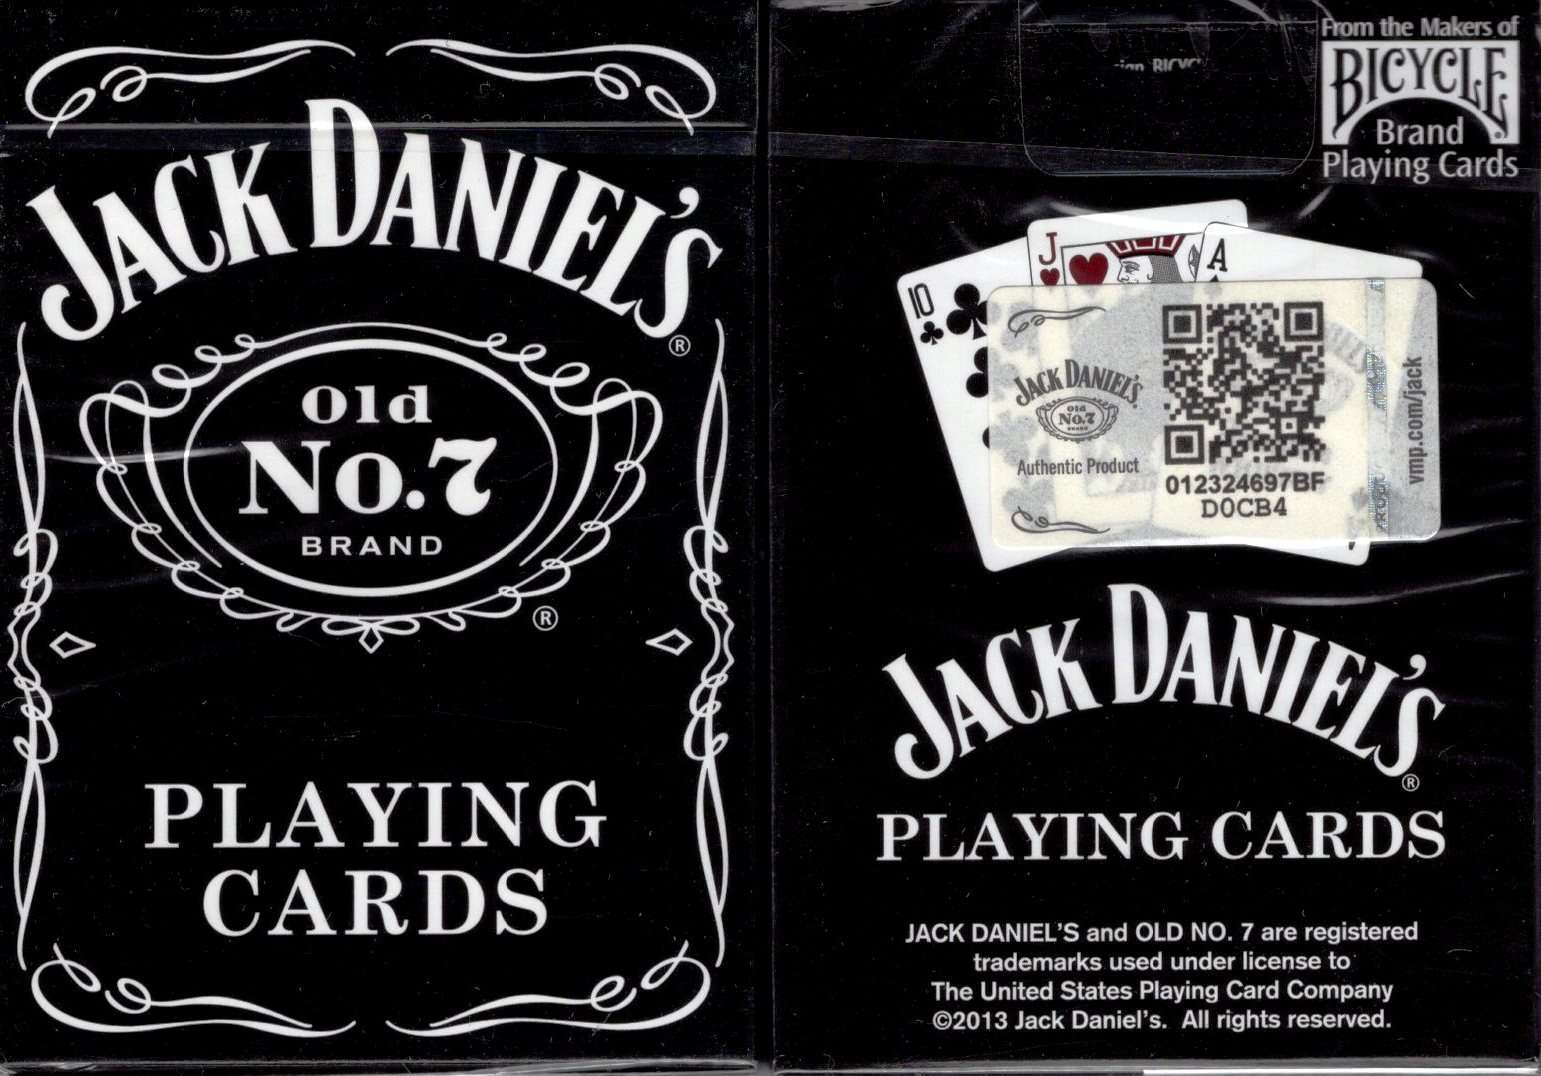 PlayingCardDecks.com-Jack Daniel's Playing Cards USPCC